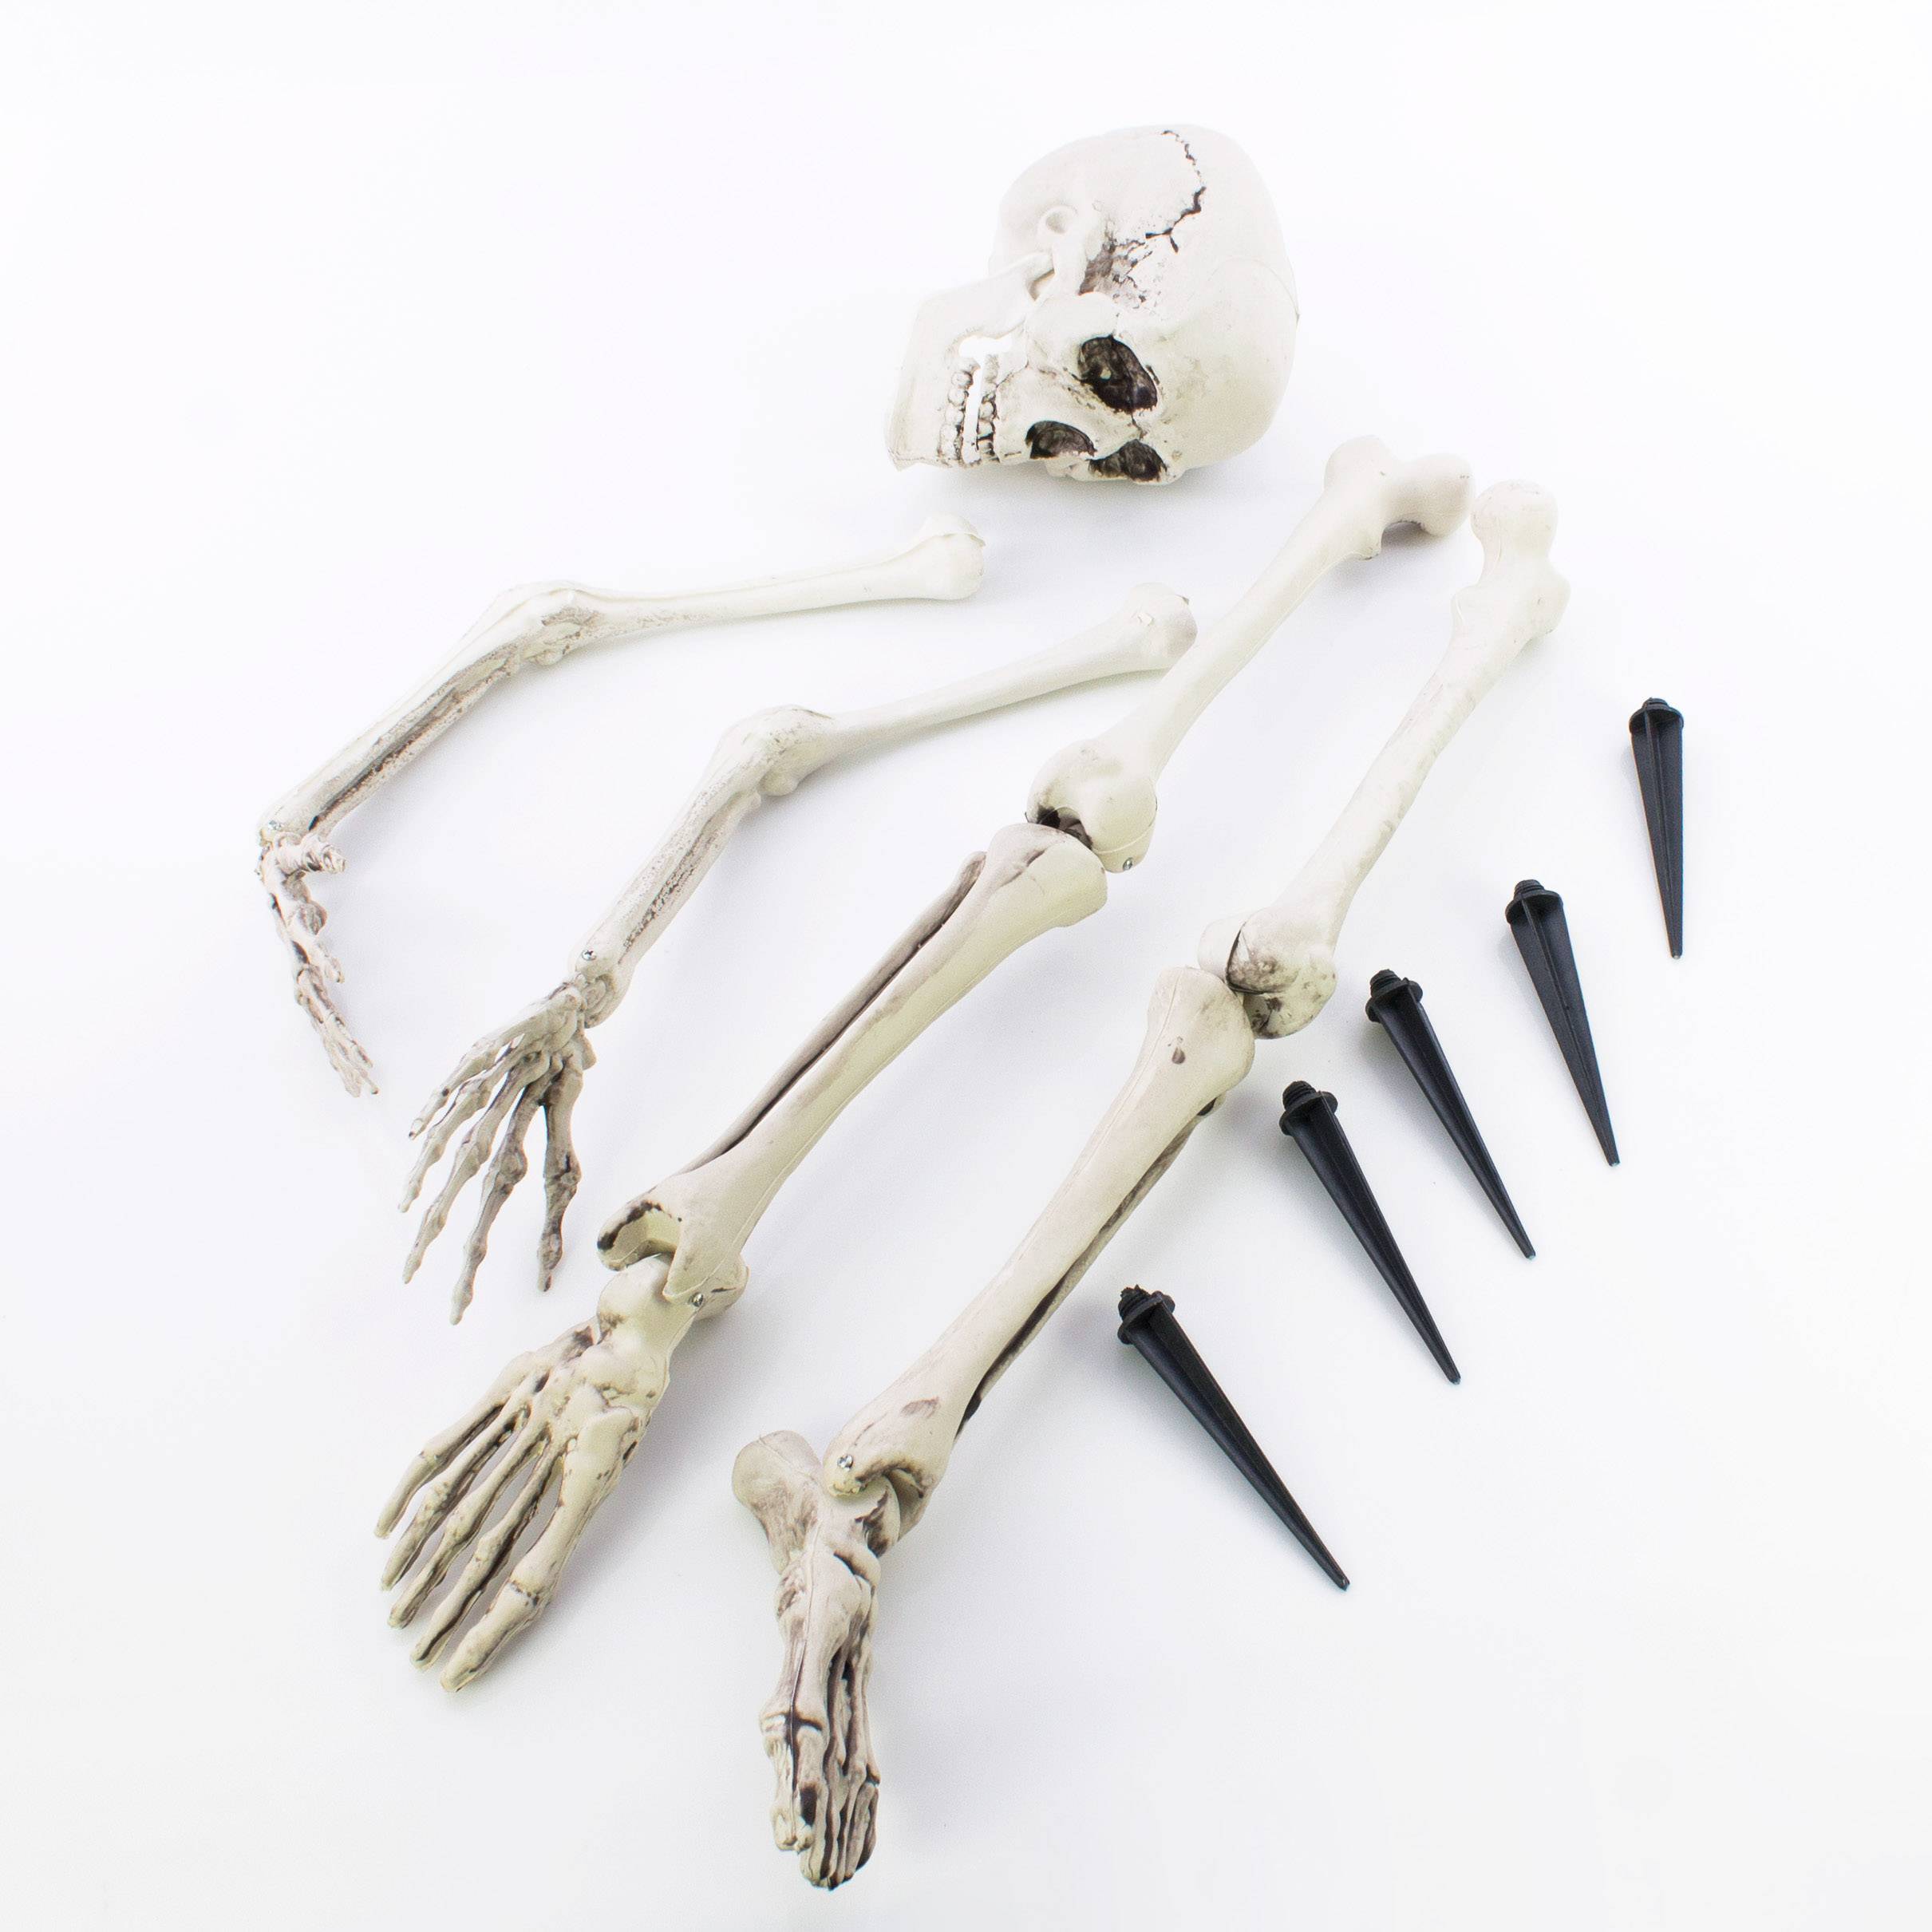 Halloween Skelett Teile ADALBERT mit 5 Erdspieße, 19cm, 45cm, 66cm